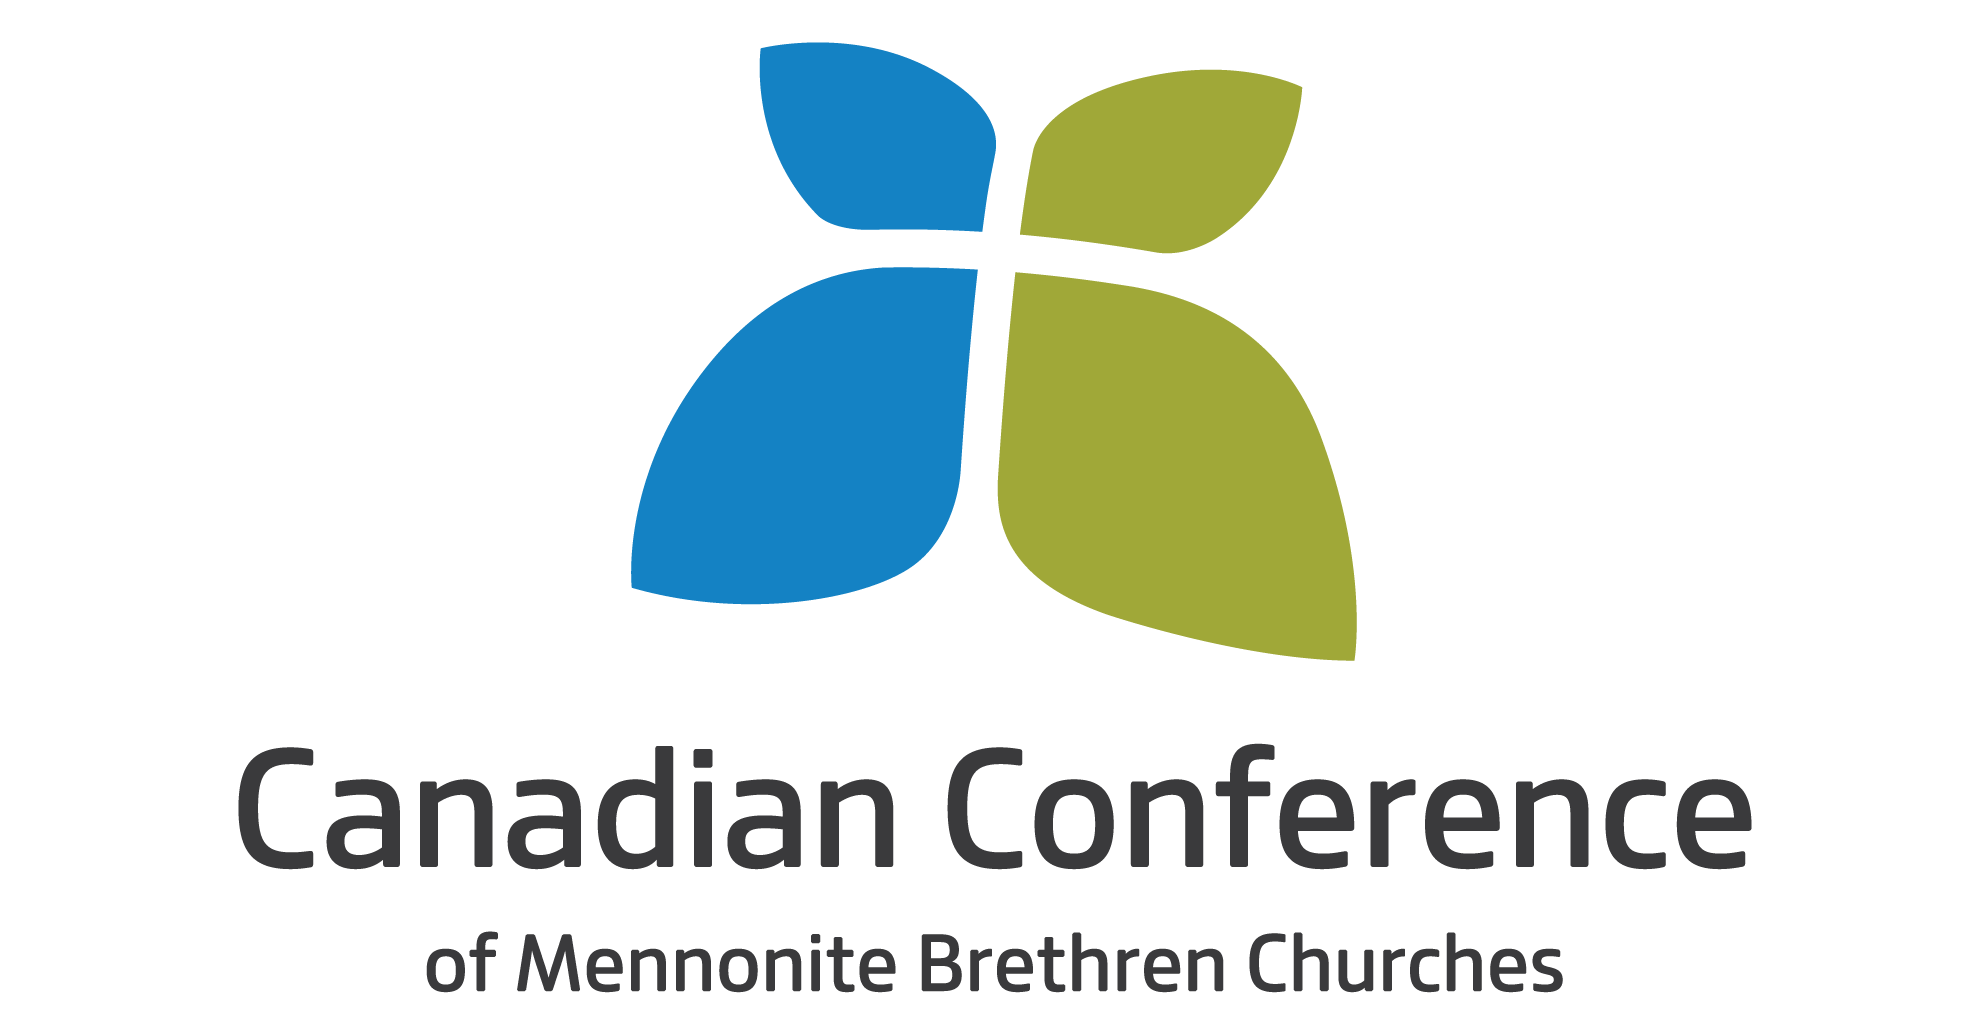 The Canadian Conference of Mennonite Brethren Churches logo.